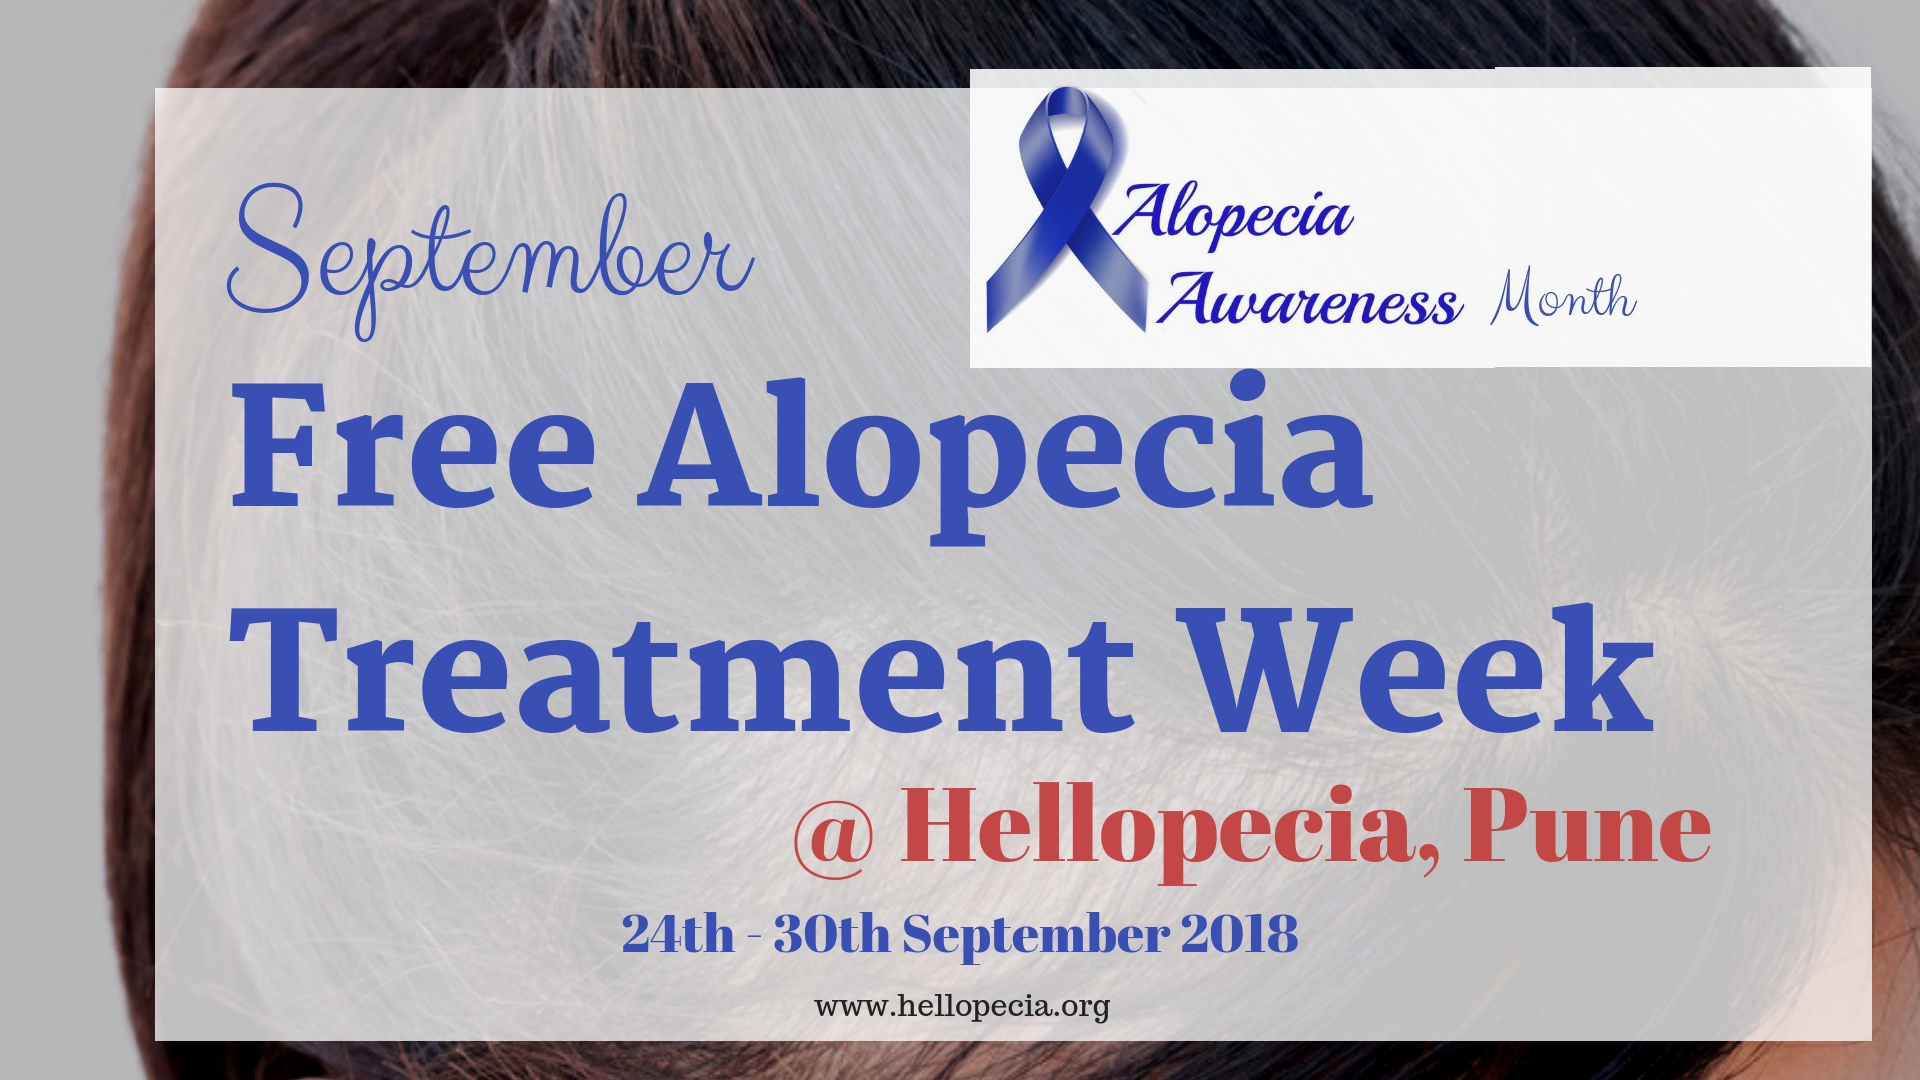 Free Alopecia treatment week at Hellopecia, Pune